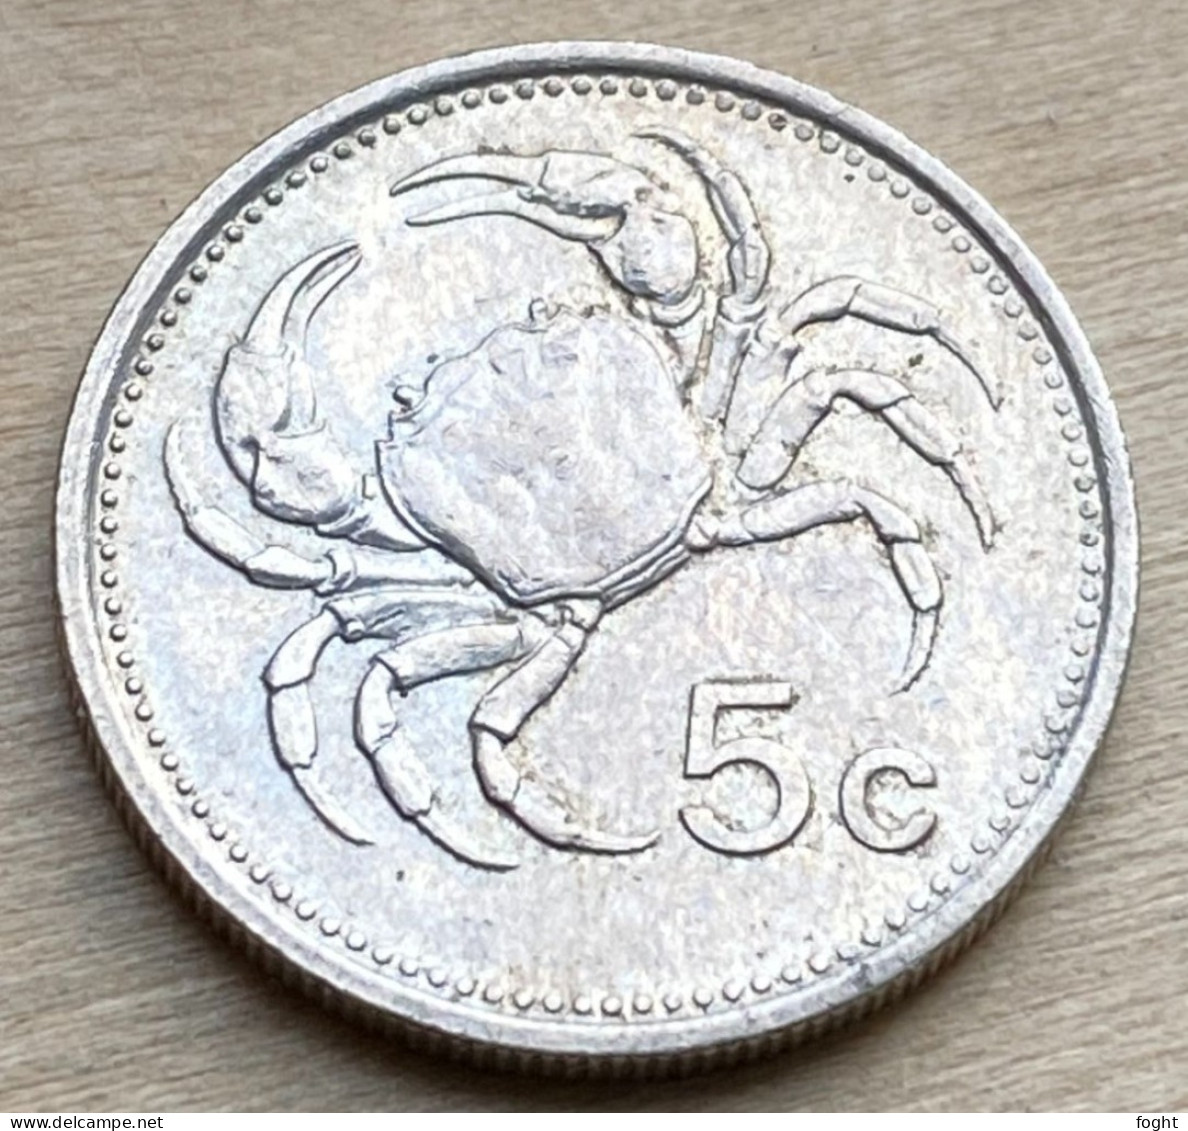 1986 Malta Standard Coin 5 Cents,KM#77,7372K - Malte